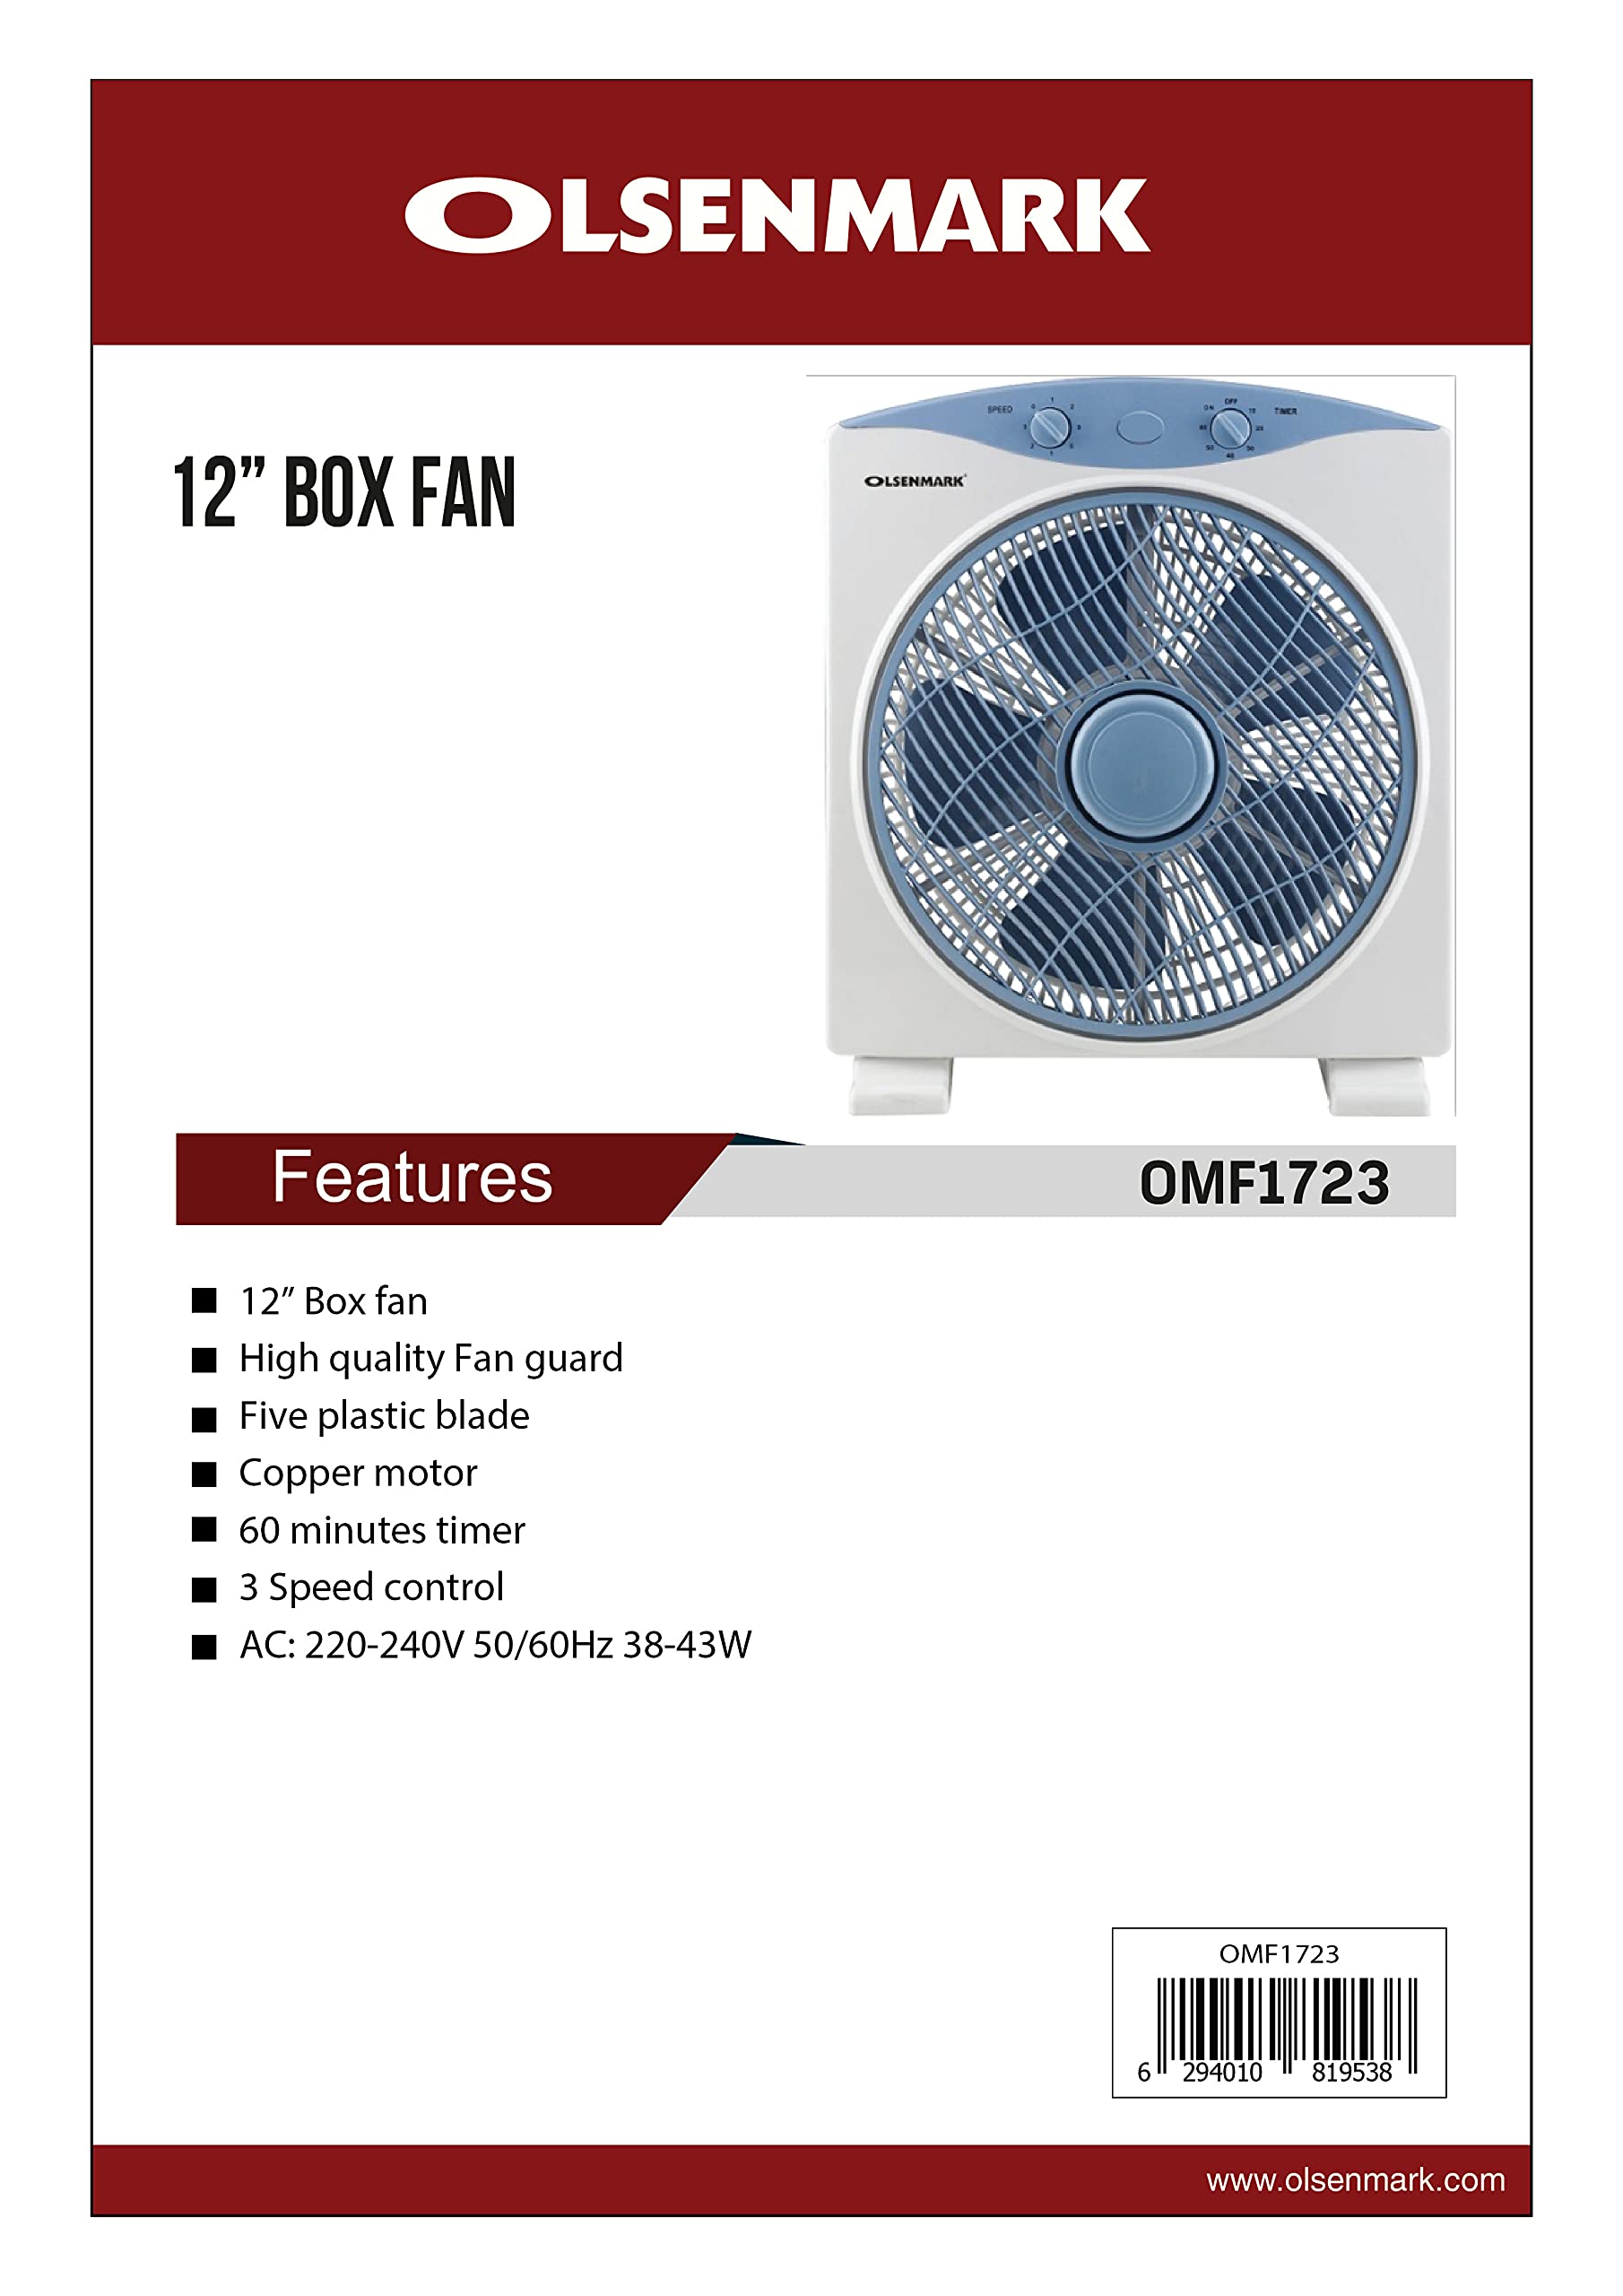 Olsenmark Box Fan, White/Blue , 12Inch مروحة مكتب بتصميم صندوق من اولسن مارك باللونين الابيض والازرق مقاس 12 بوصة